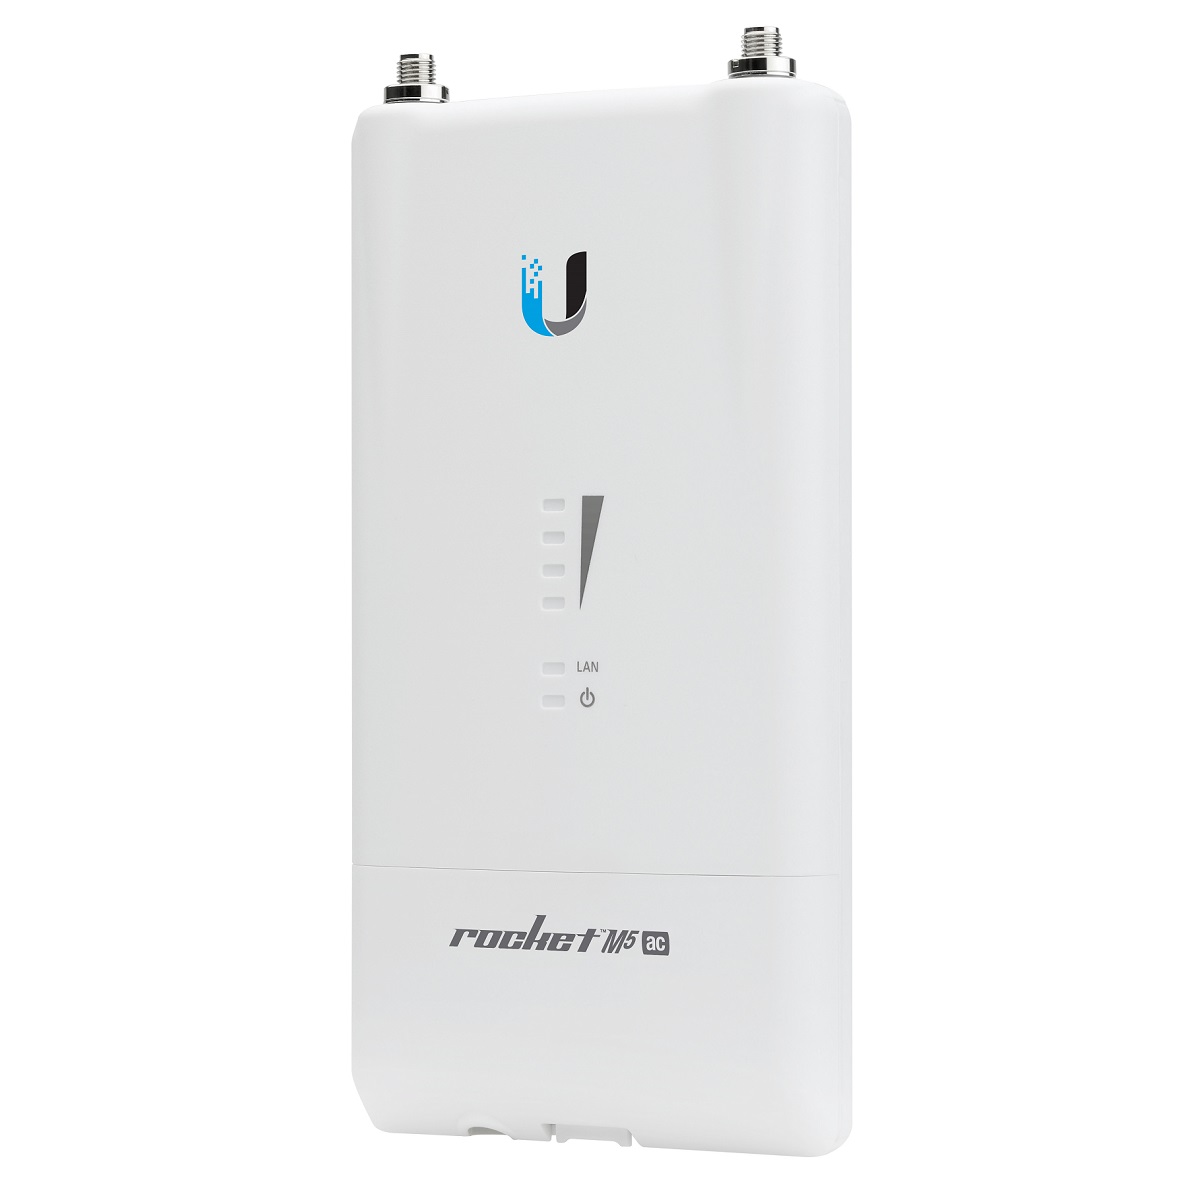 Ubiquiti Networks Rocket 5ac Lite 450Mbit/s White WLAN access point 